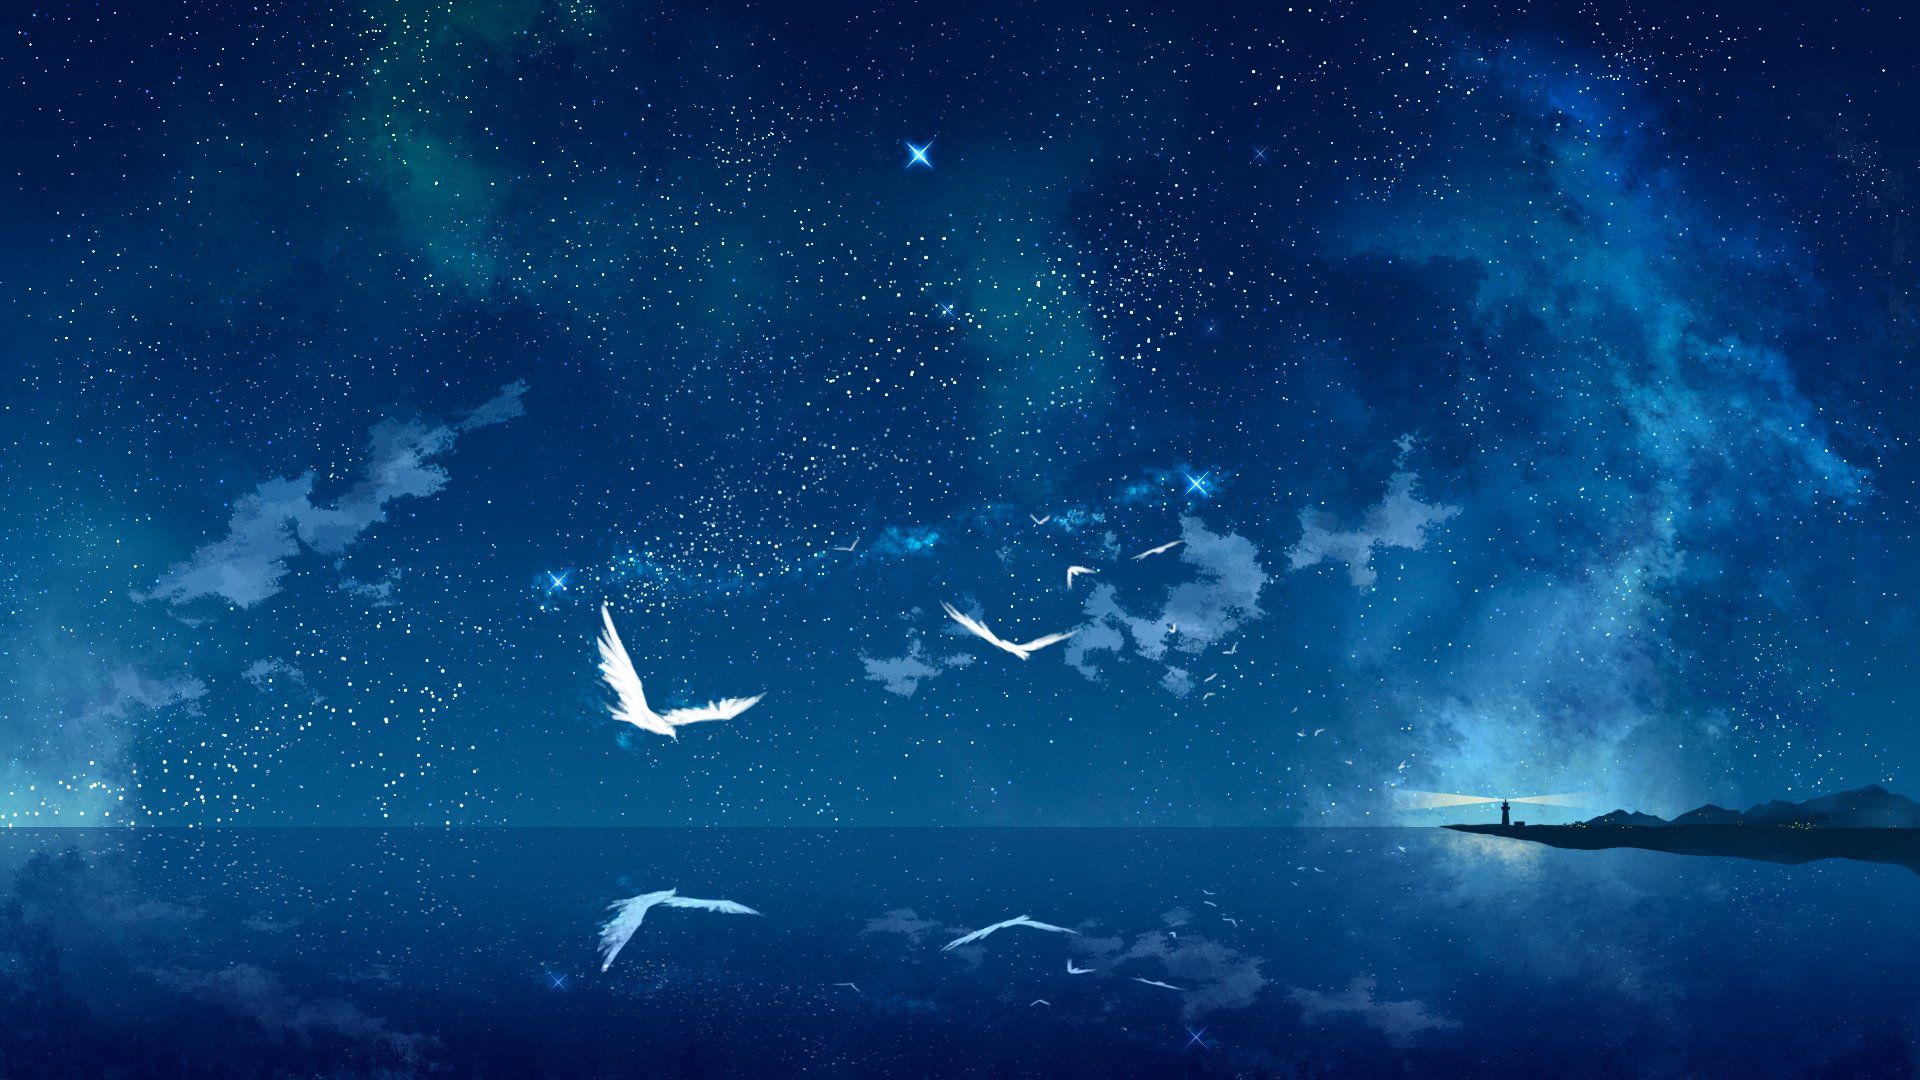 Beautiful Night Evening Fantasy Anime Landscape Stock Illustration  2208404973  Shutterstock